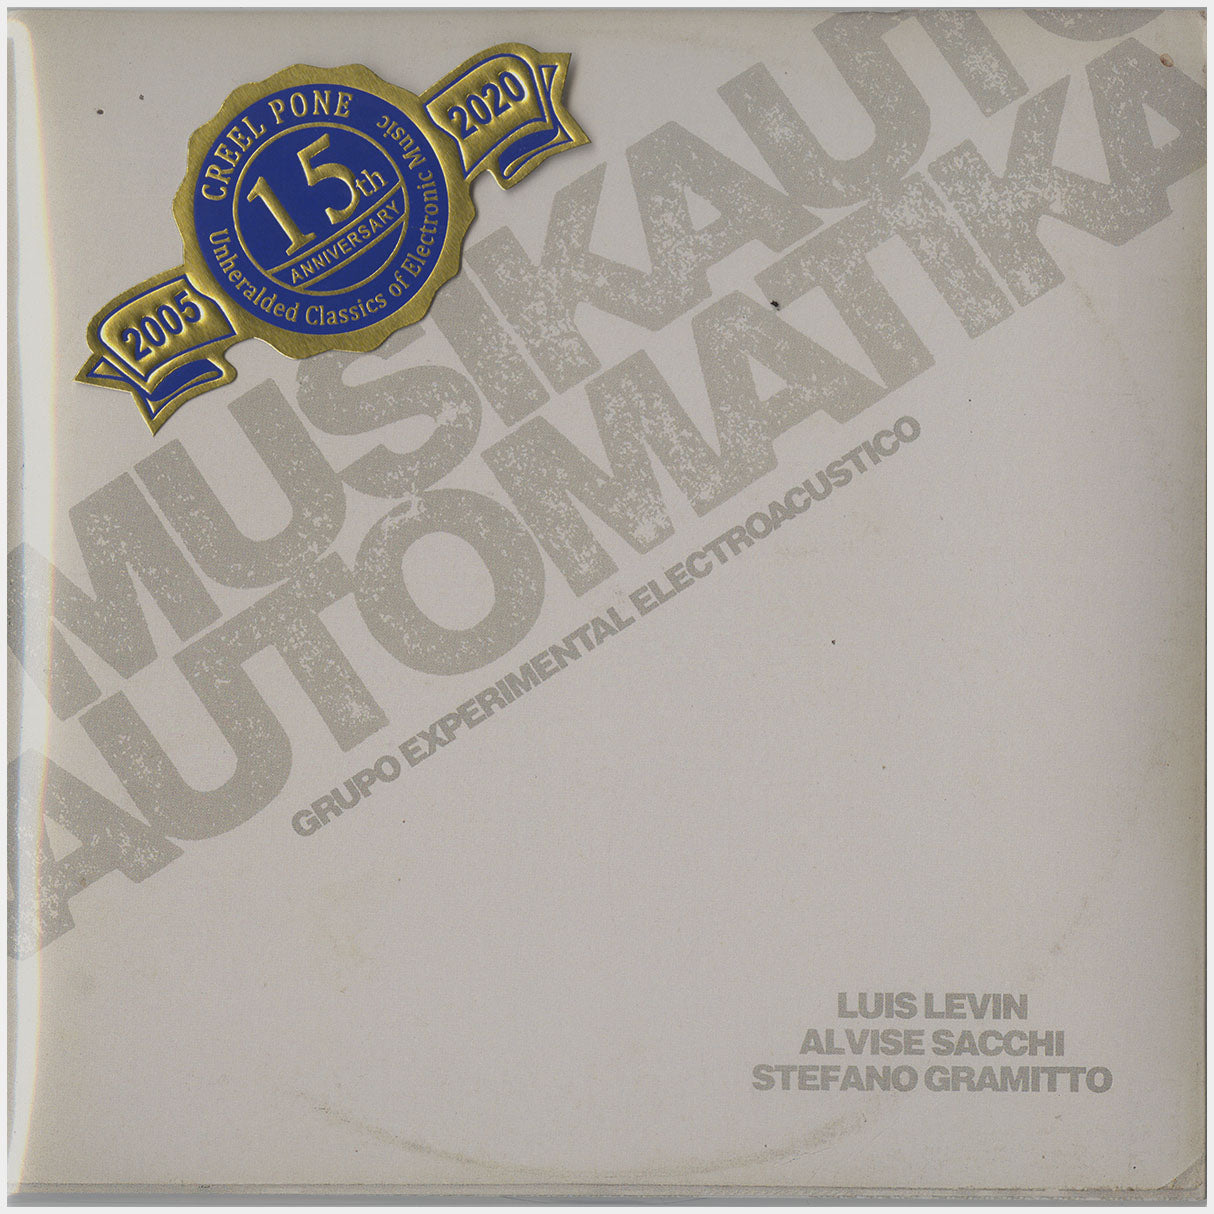 [CP 065 CD] Grupo Experimental Electroacustico; MusikAutomatika